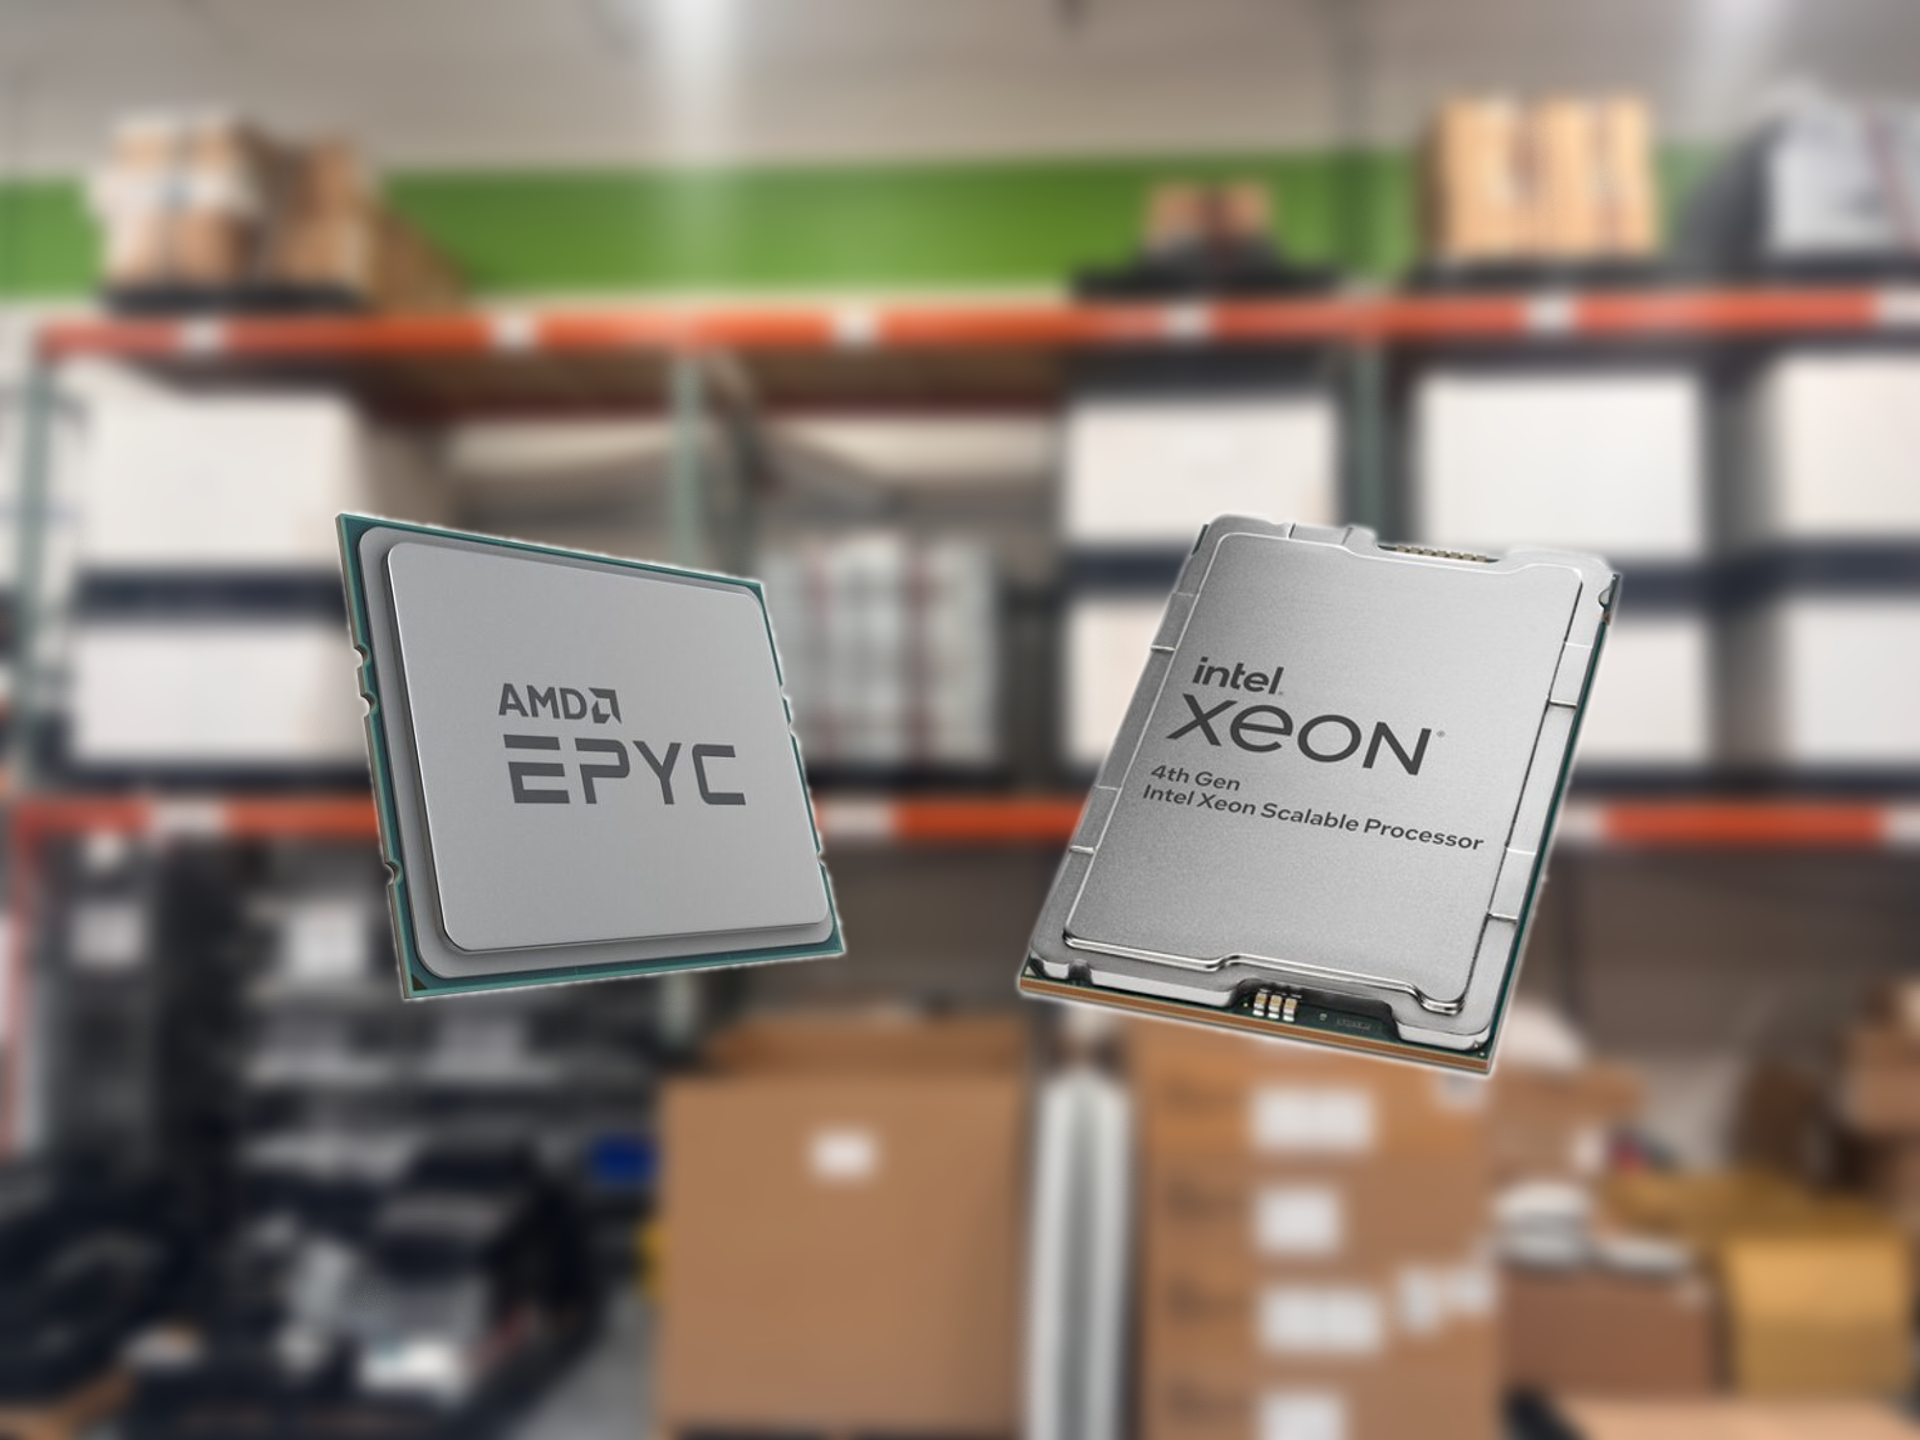 Amd Epyc Vs Intel Xeon The Ultimate Comparison Exit Technologies